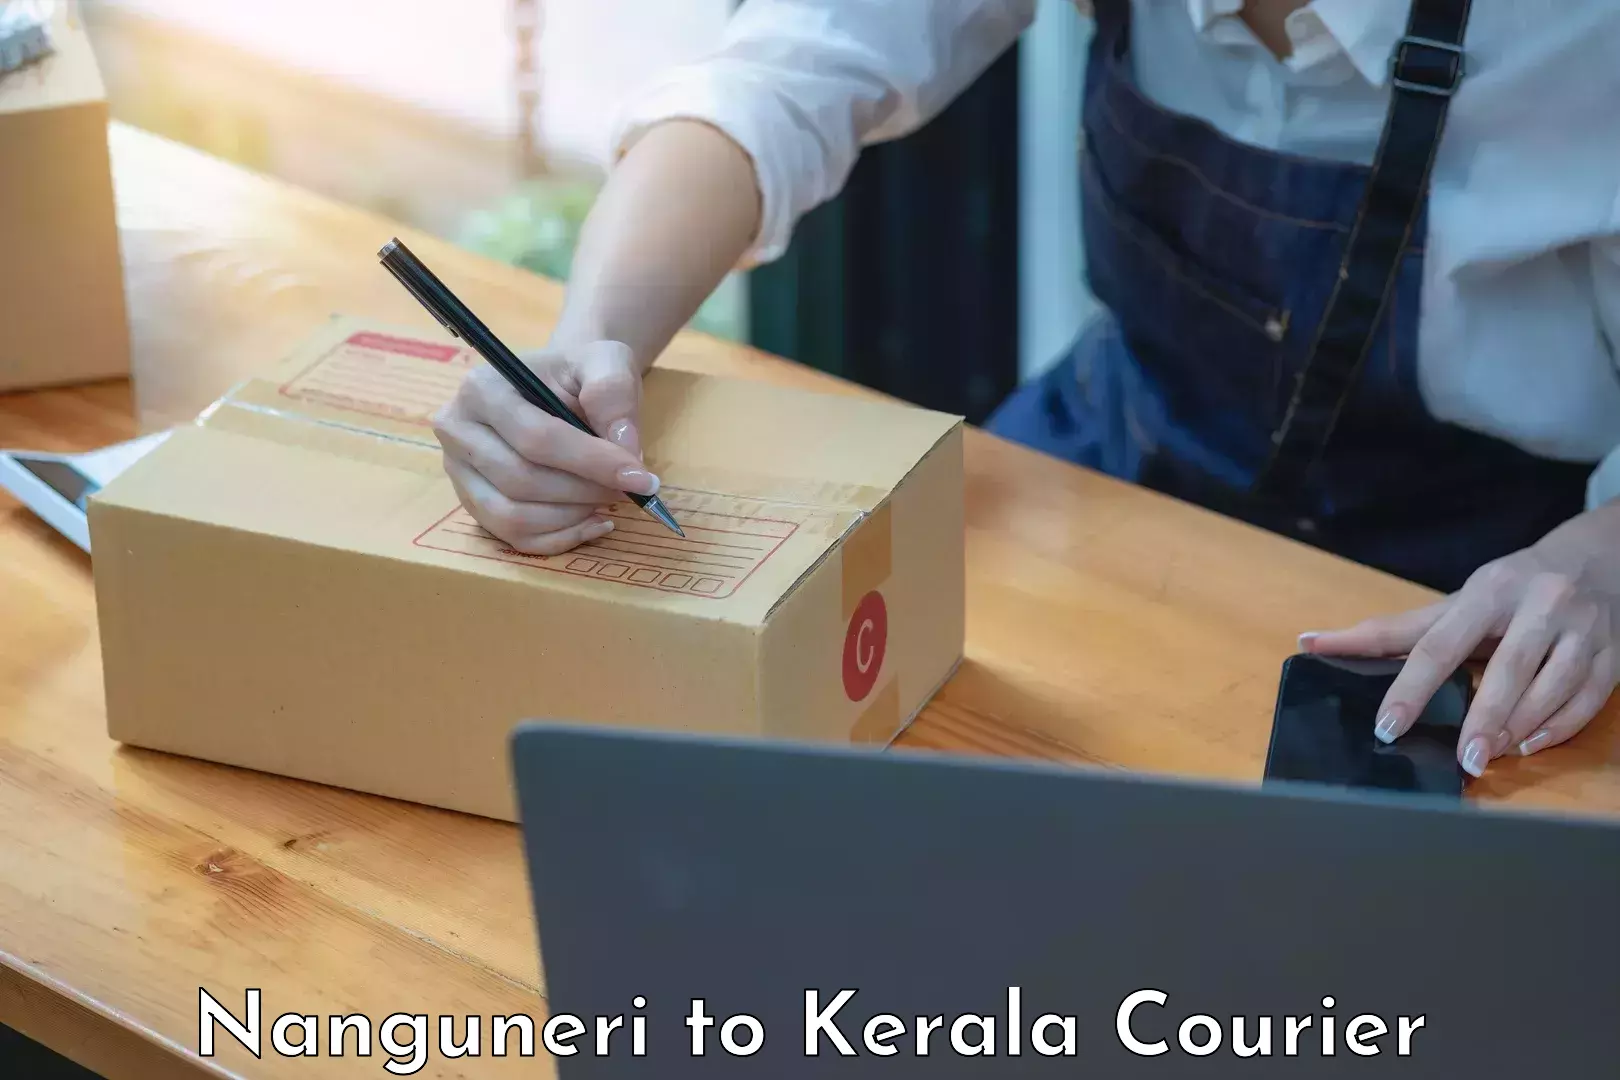 Luggage delivery app Nanguneri to Kerala